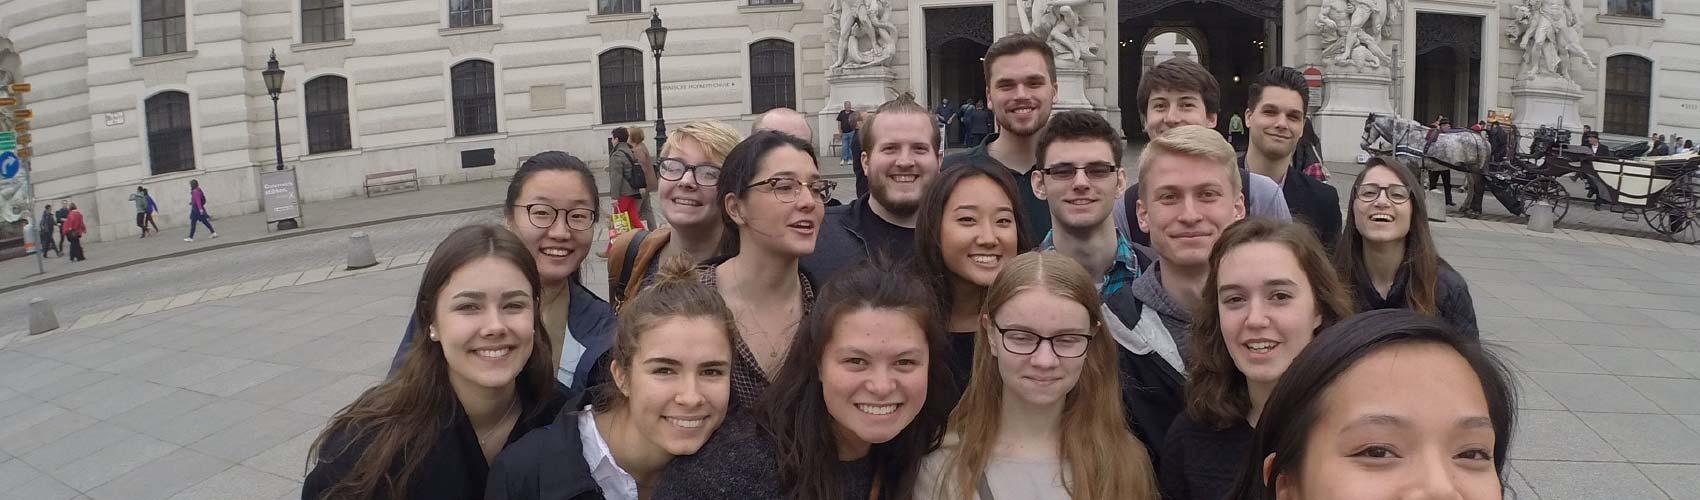 German Studies students on study abroad